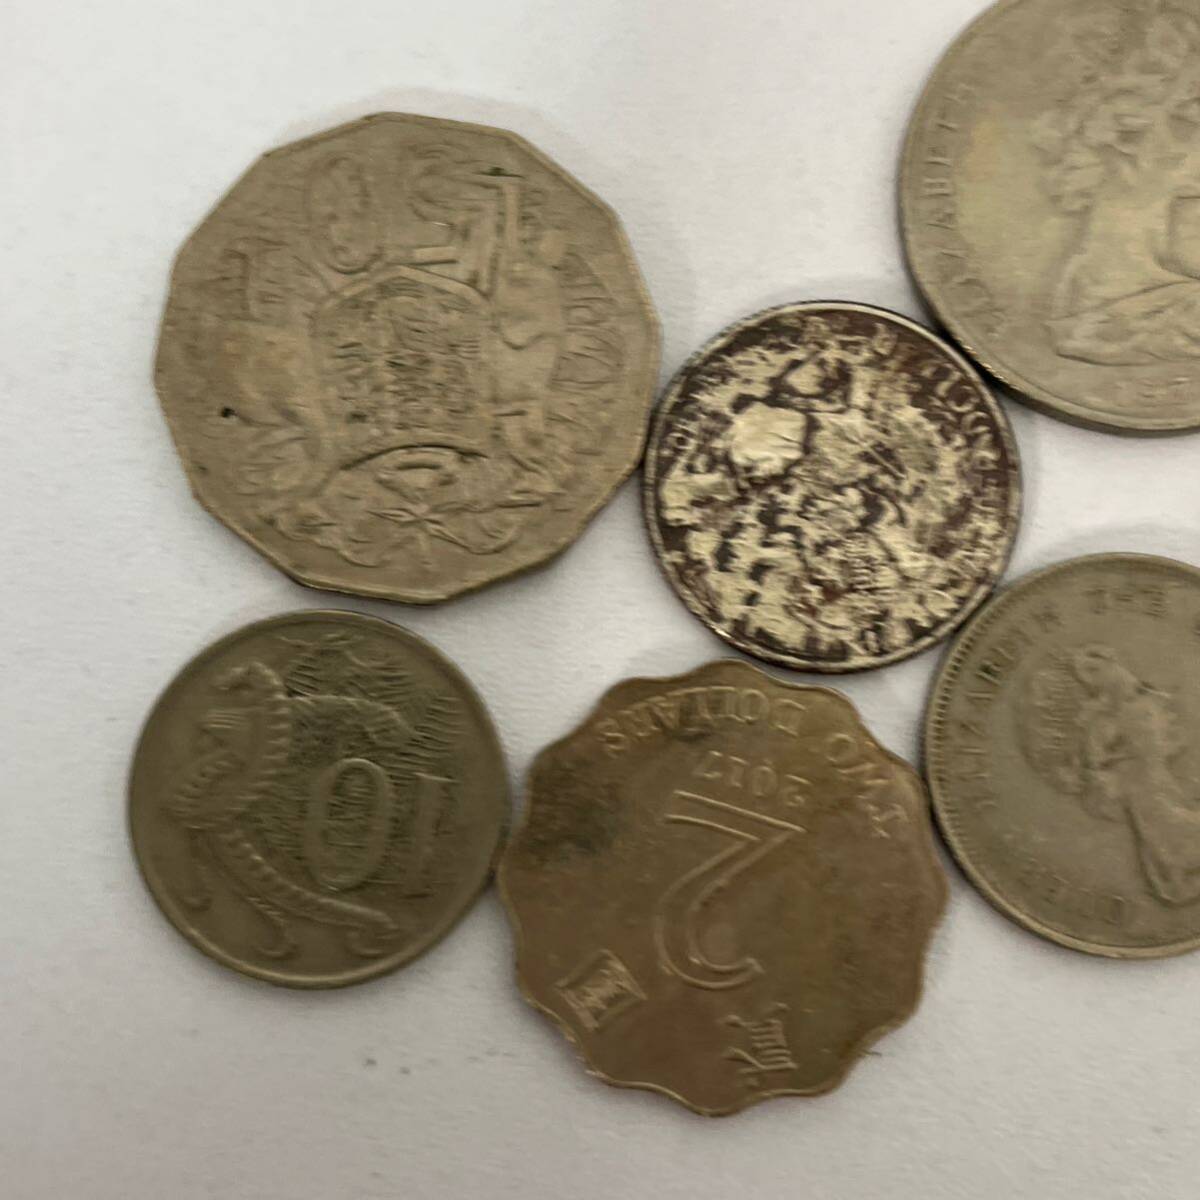 【TN0327】海外 コイン 貨幣 通貨 硬貨 コレクション 国外 マカオ 香港 アジア ゴールドカラー シルバーカラー お金 の画像5